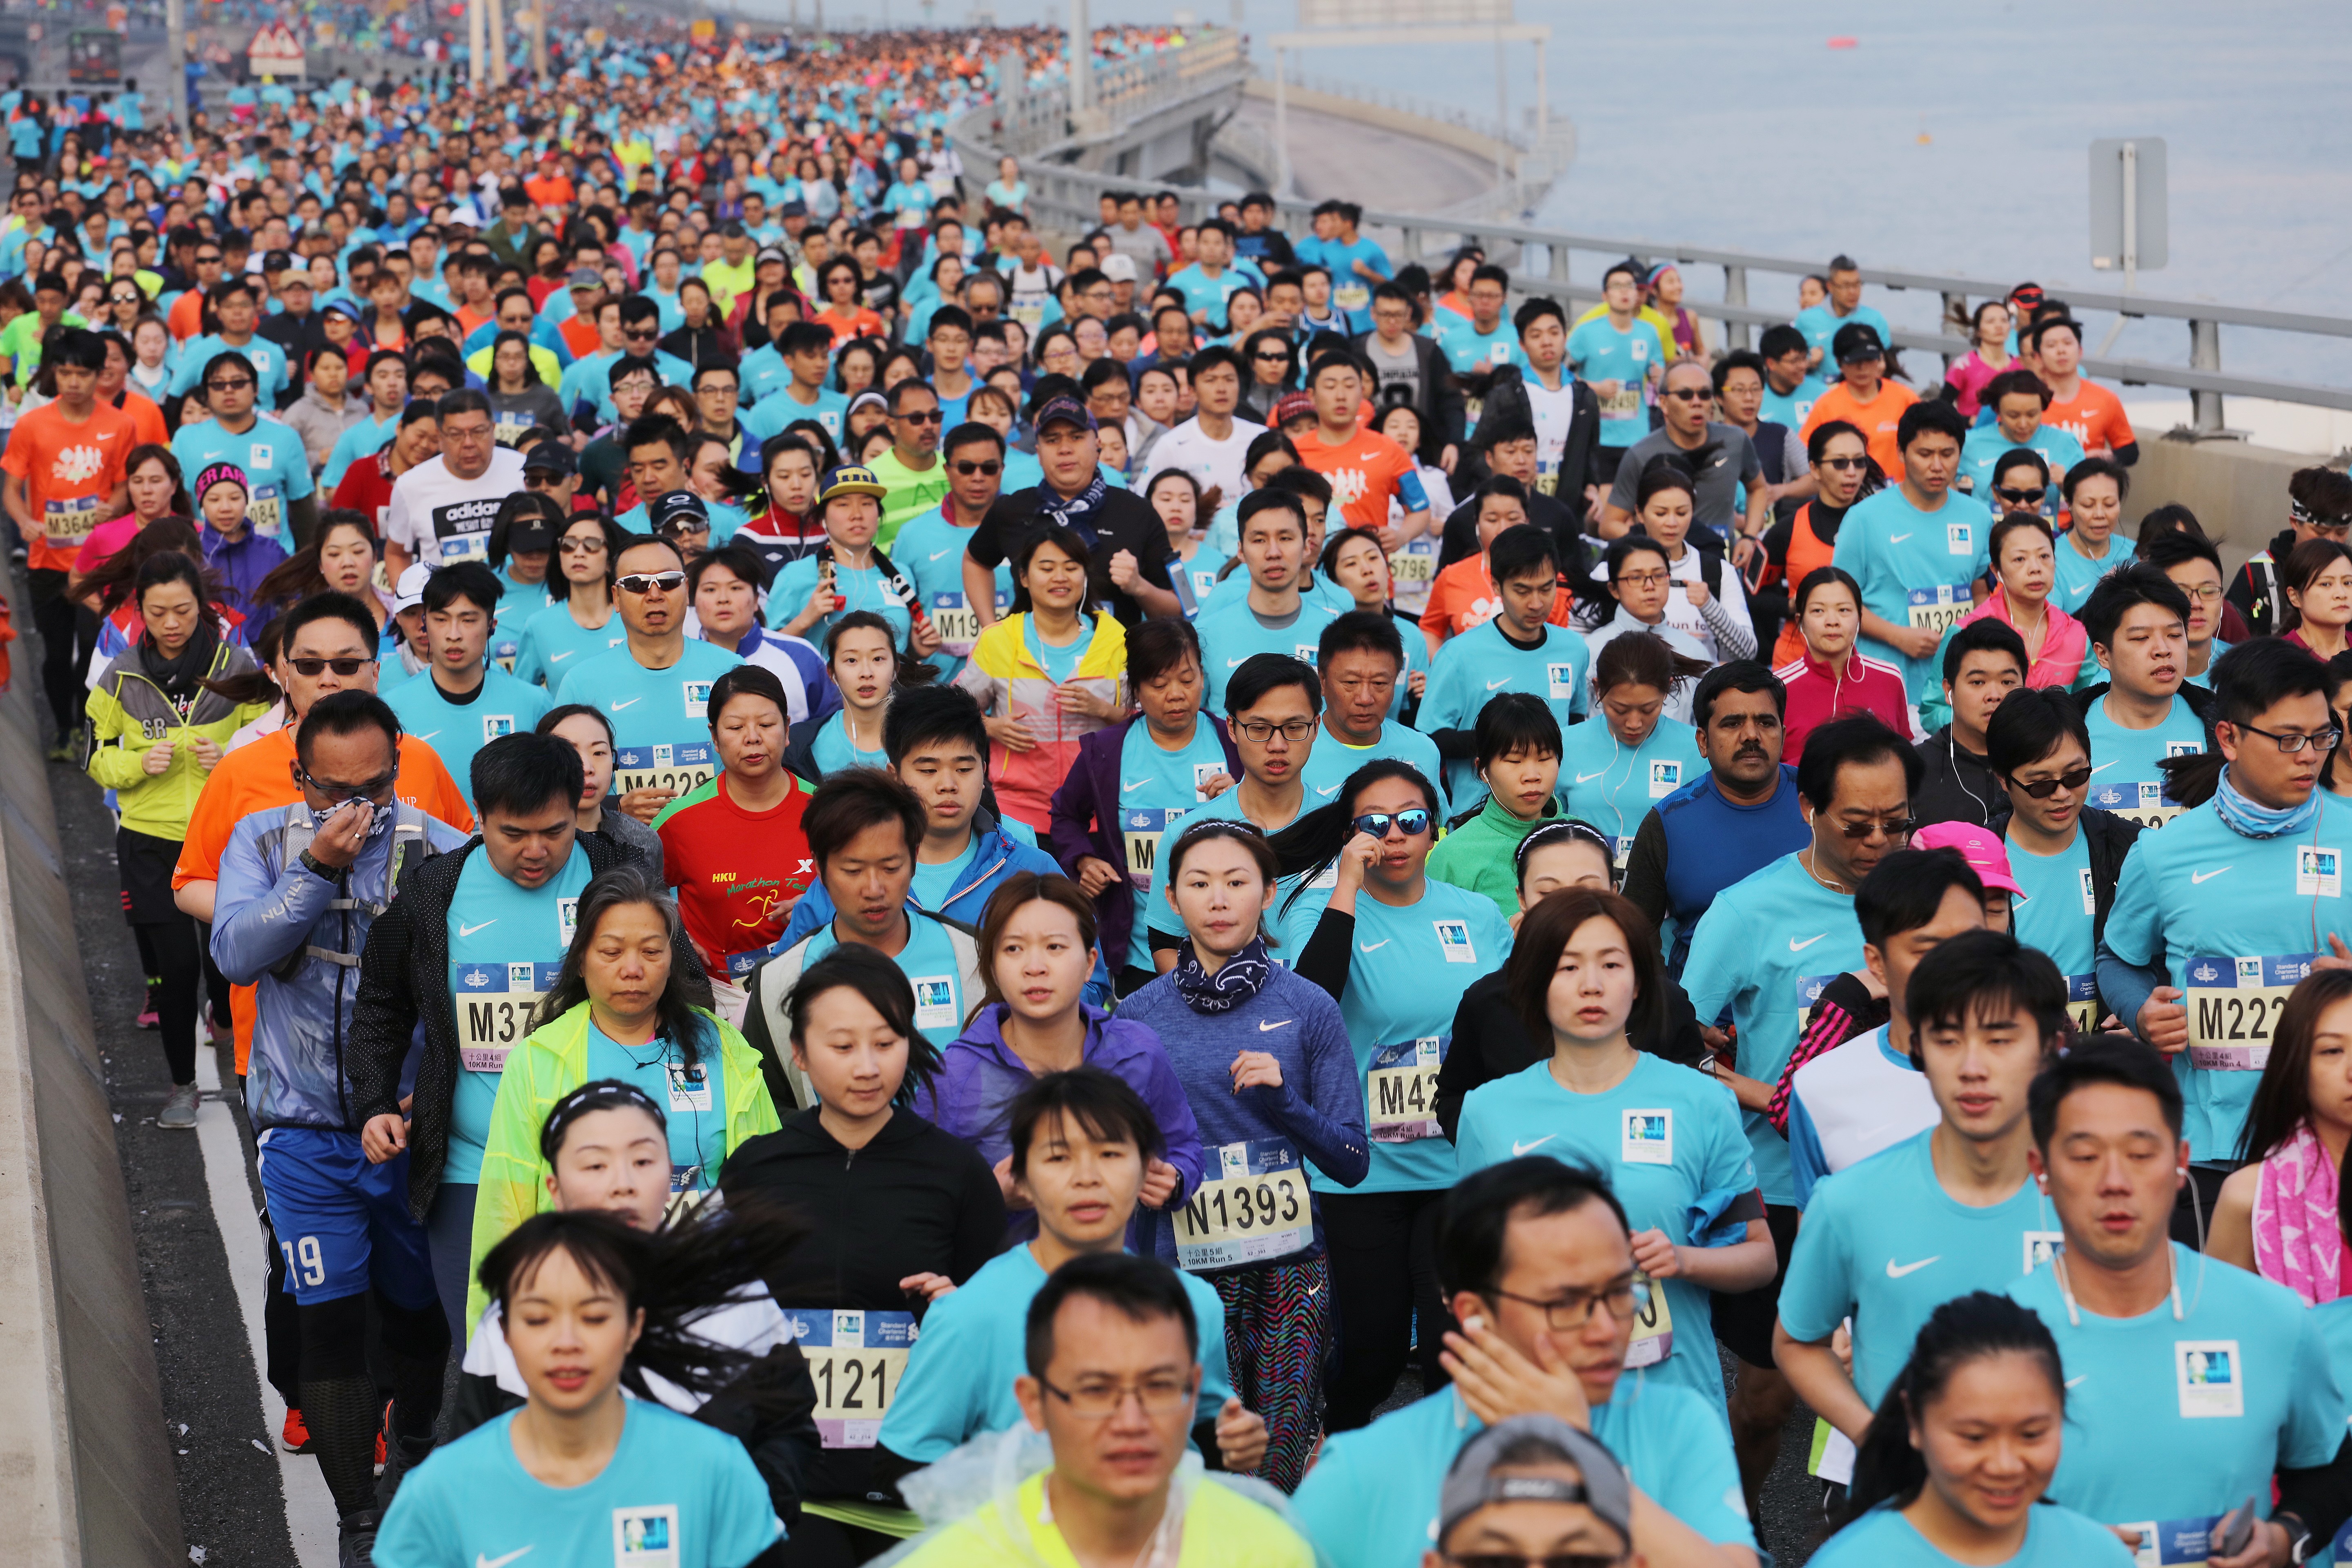 Thousands of runners take part in the Standard Chartered Hong Kong Marathon each year. Photo: Felix Wong